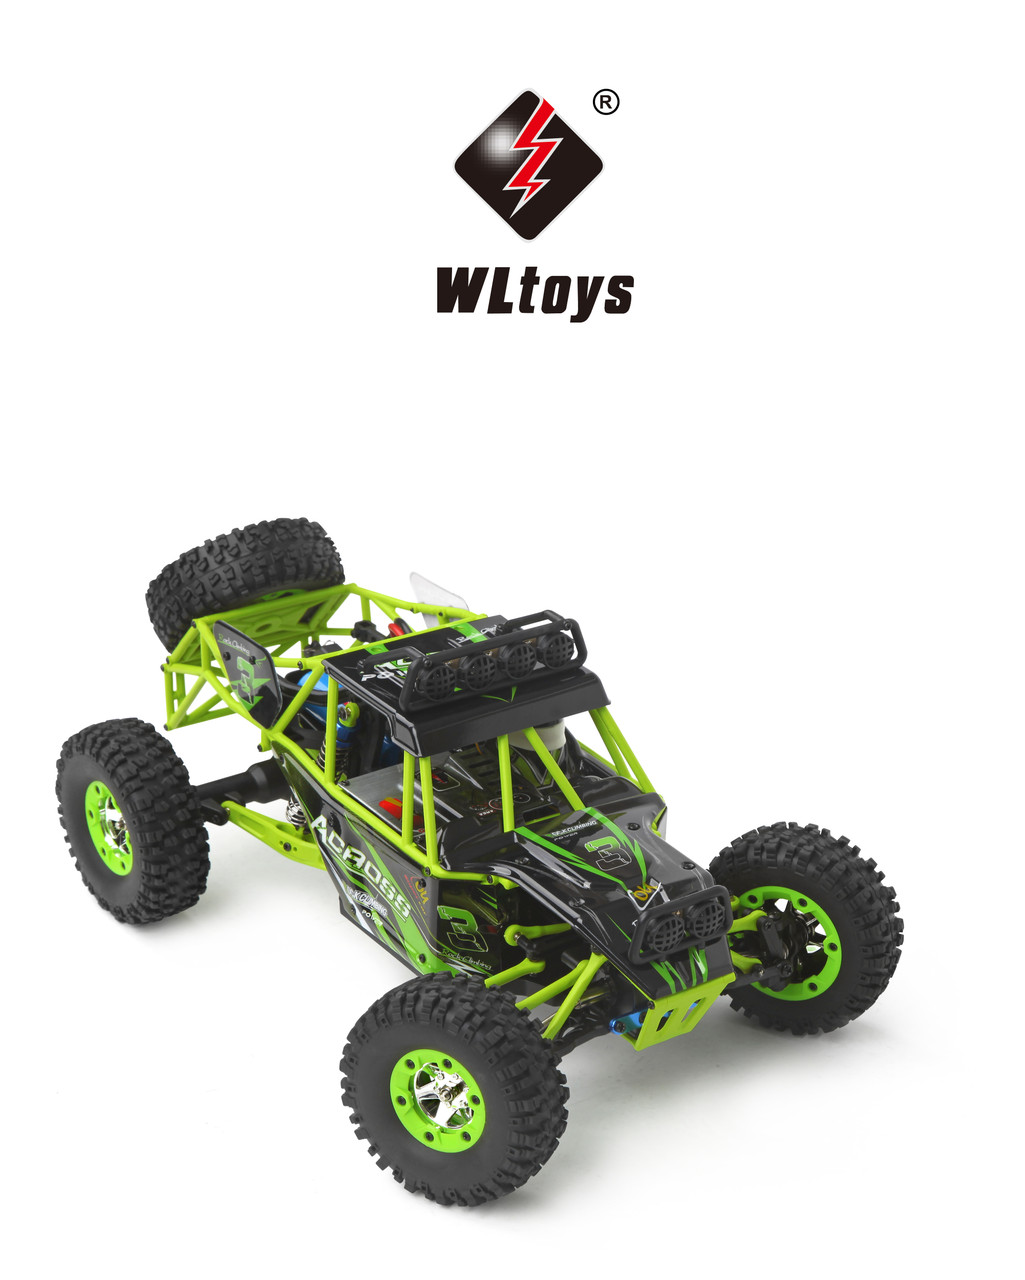 WLtoys 12427 2.4G 1/12 4WD Crawler RC Car With LED Light 7.4V 1500mAh